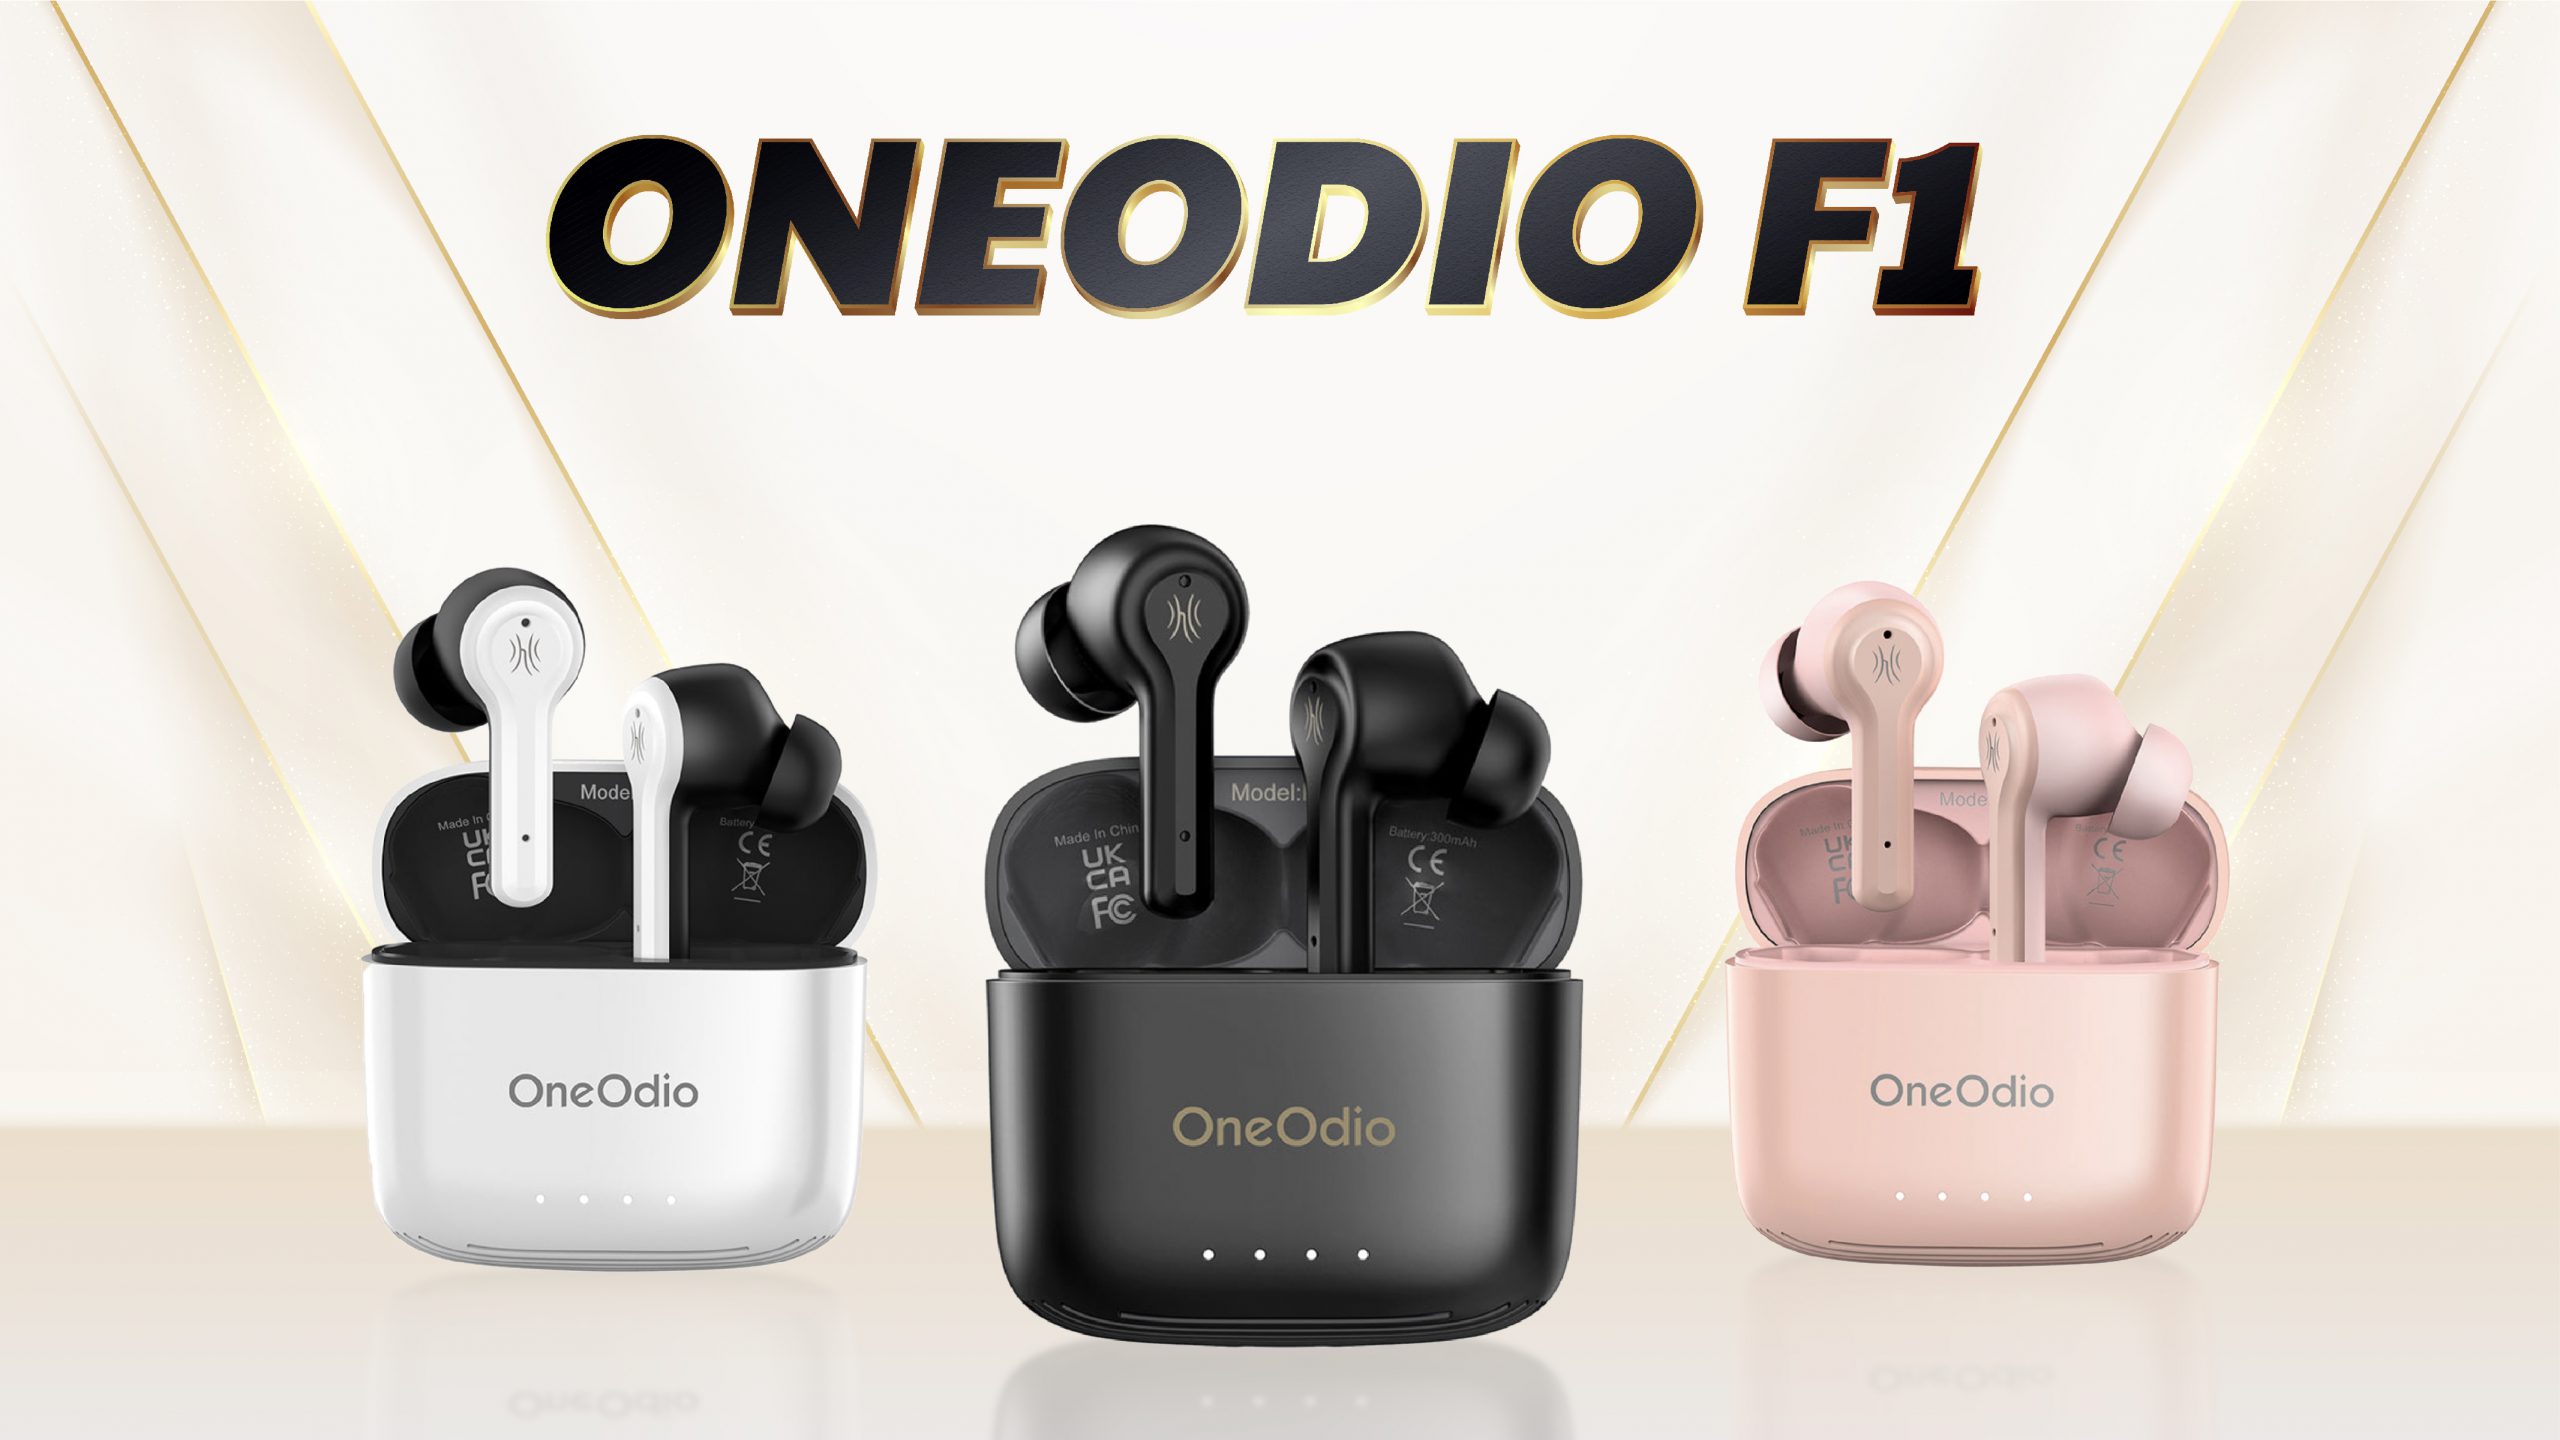 OneOdio F1